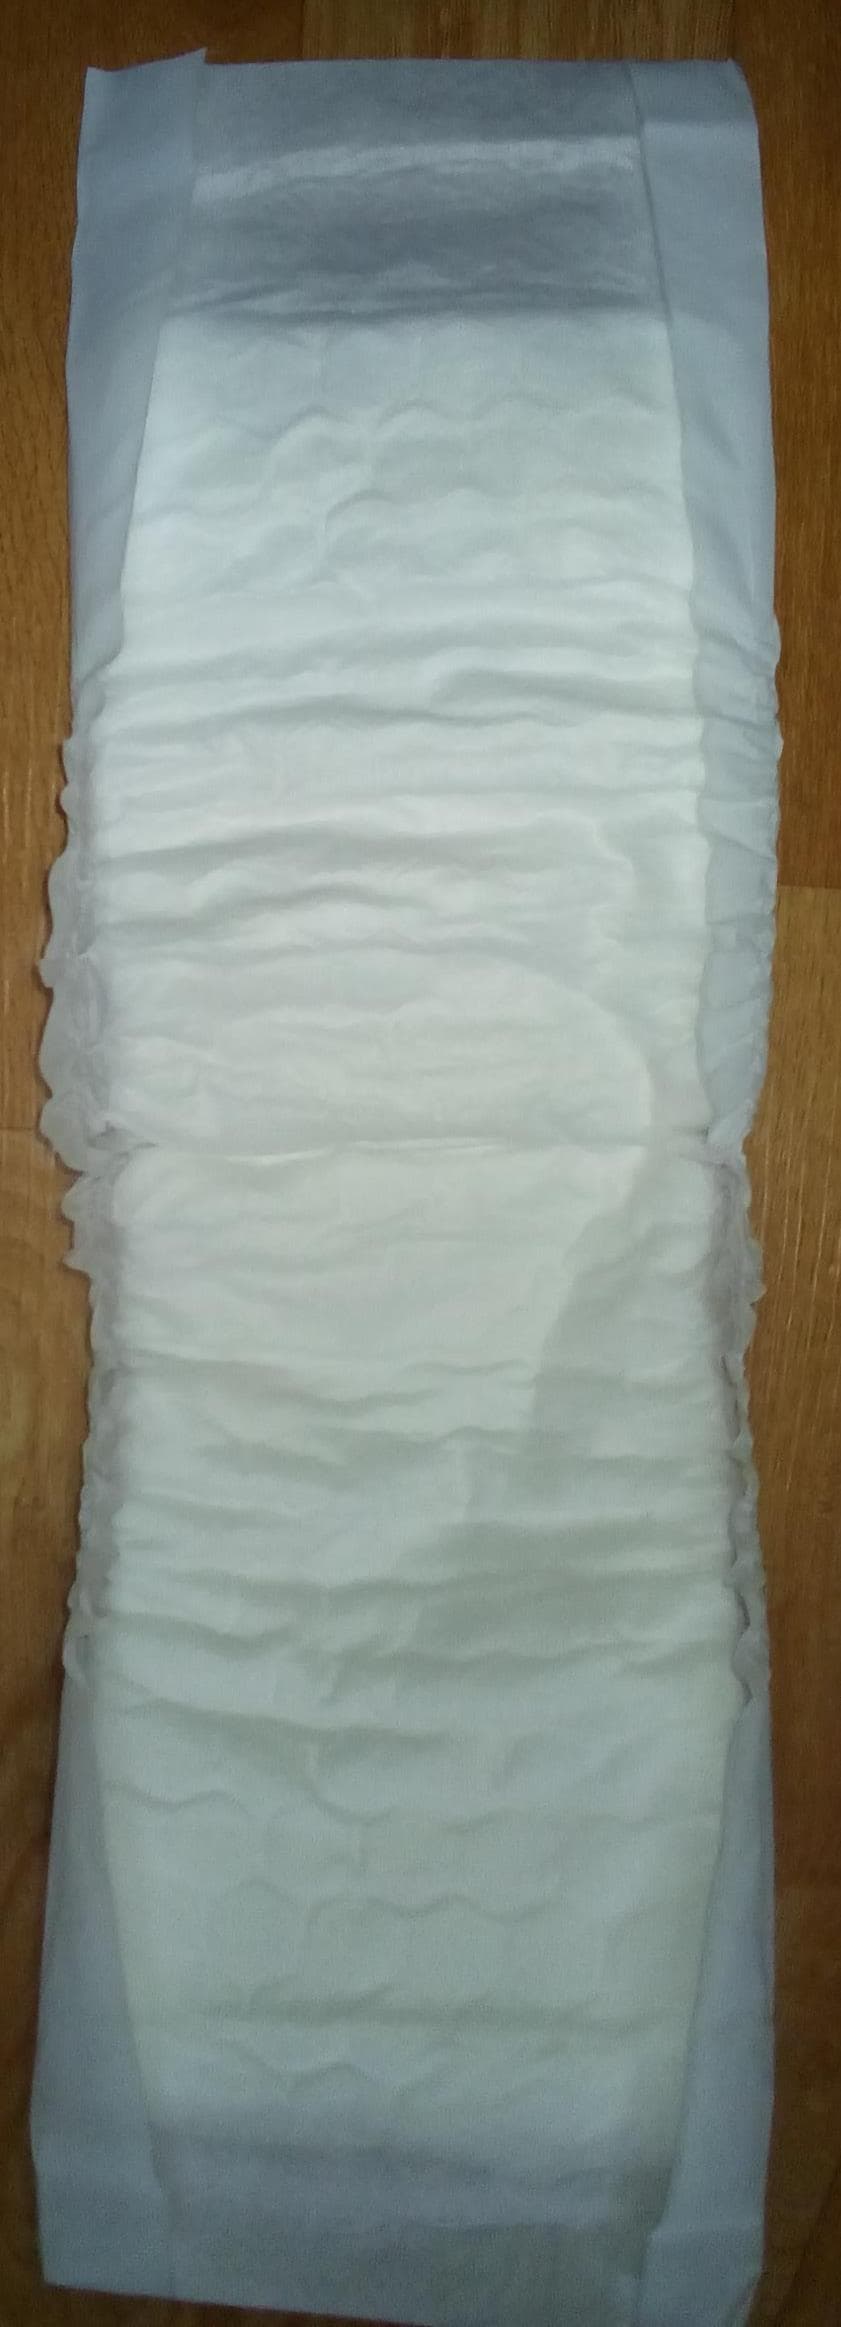 Disposable Adult Diaper Refills_Inserts